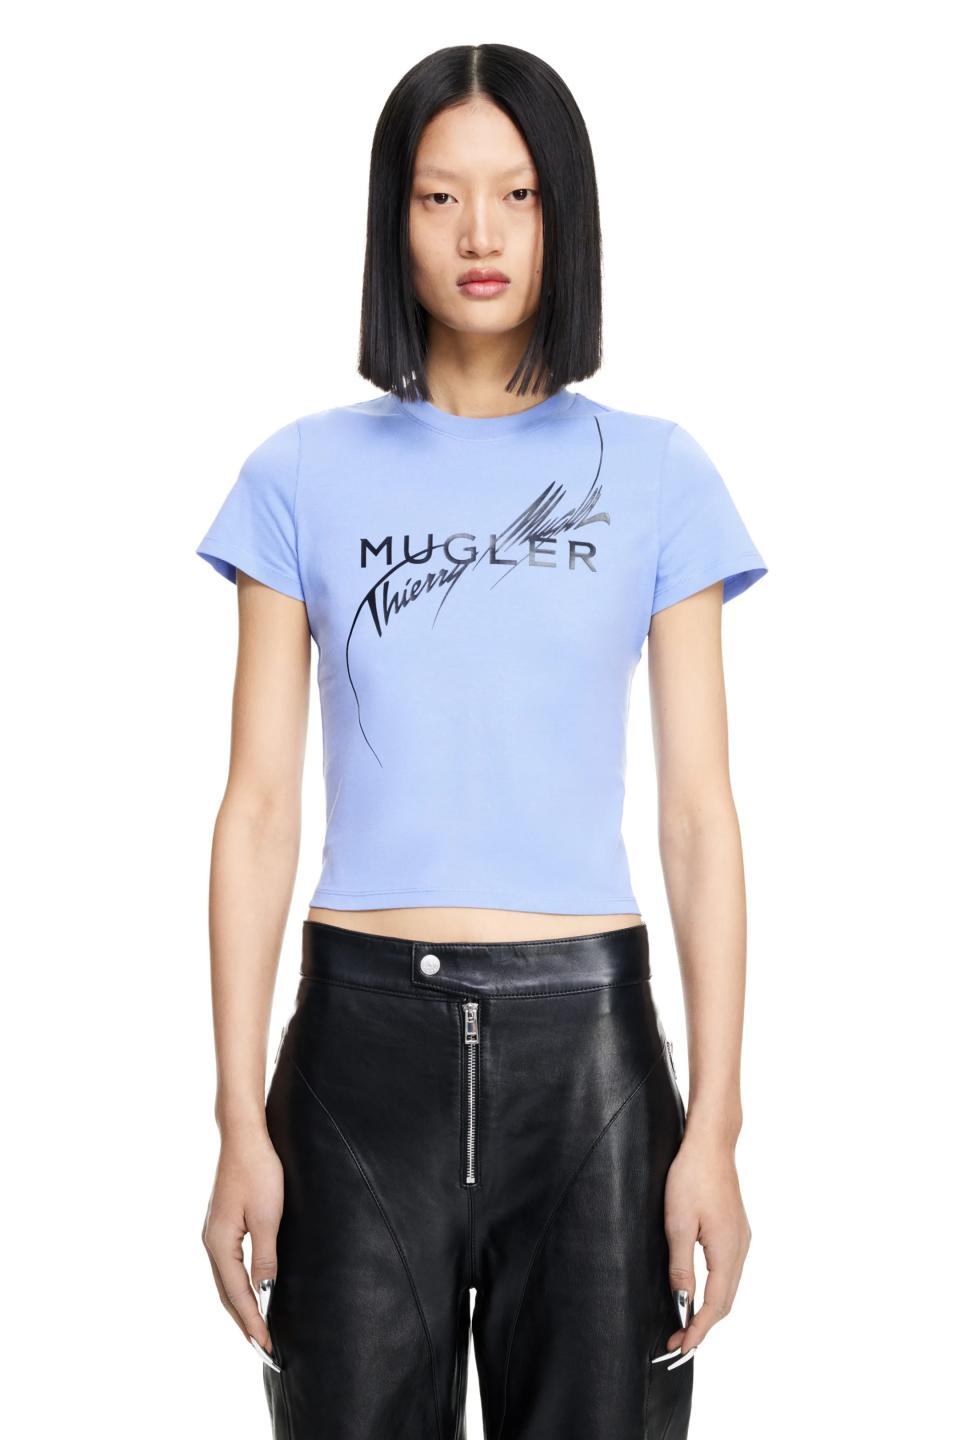 Mugler x H&M Printed Fitted T-Shirt